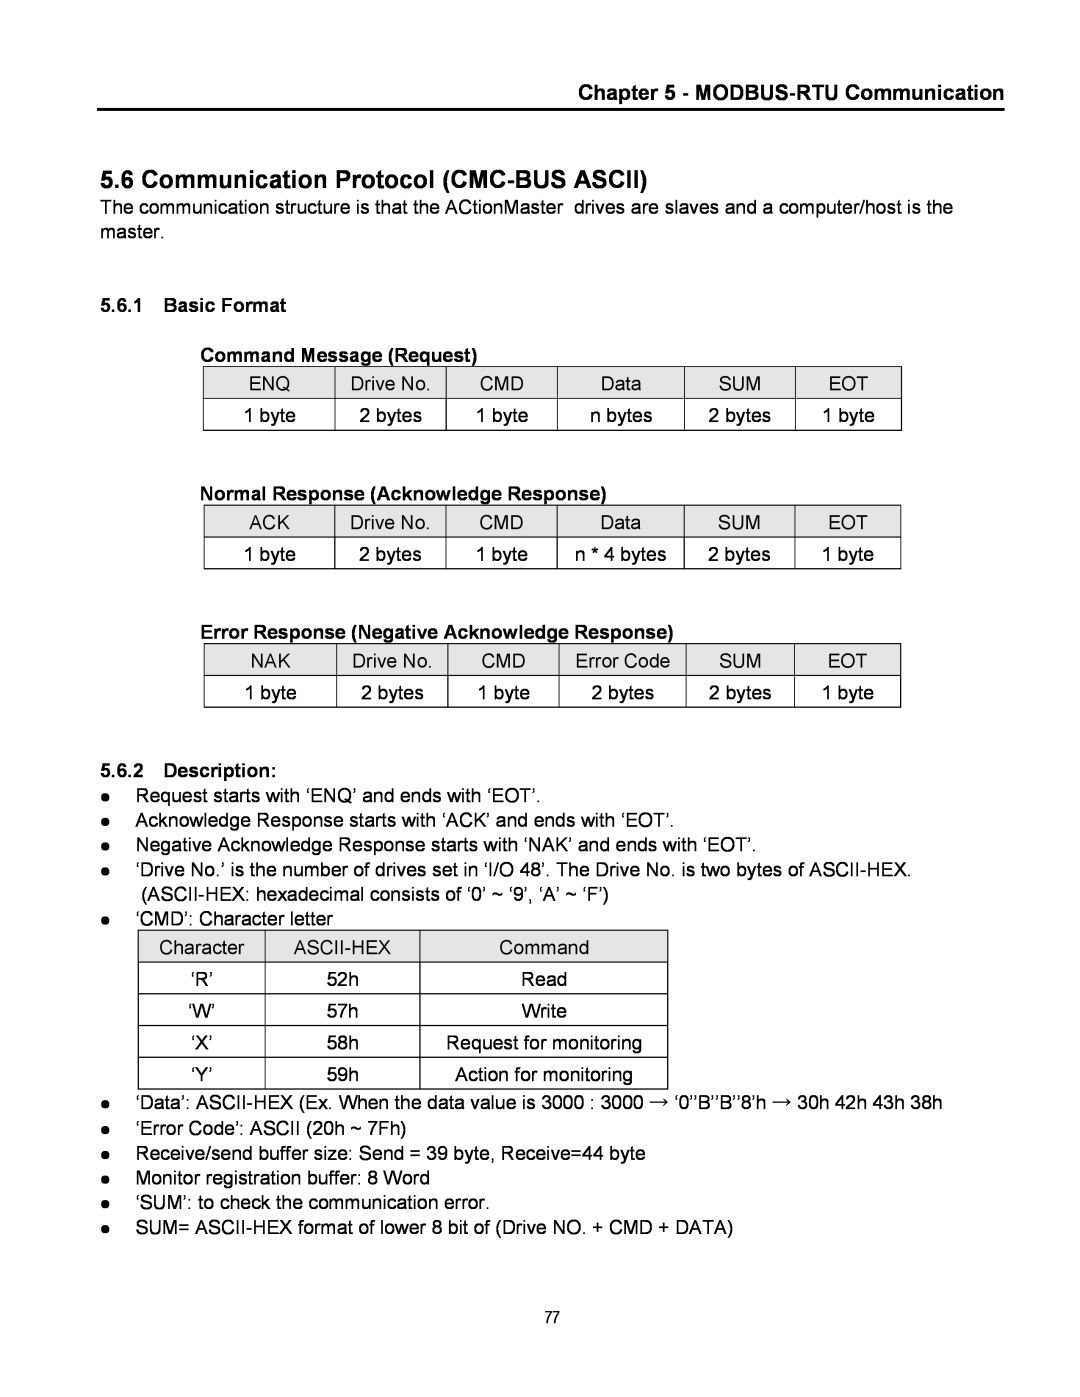 Cleveland Range inverter manual Communication Protocol CMC-BUSASCII, MODBUS-RTUCommunication, 5.6.2Description 